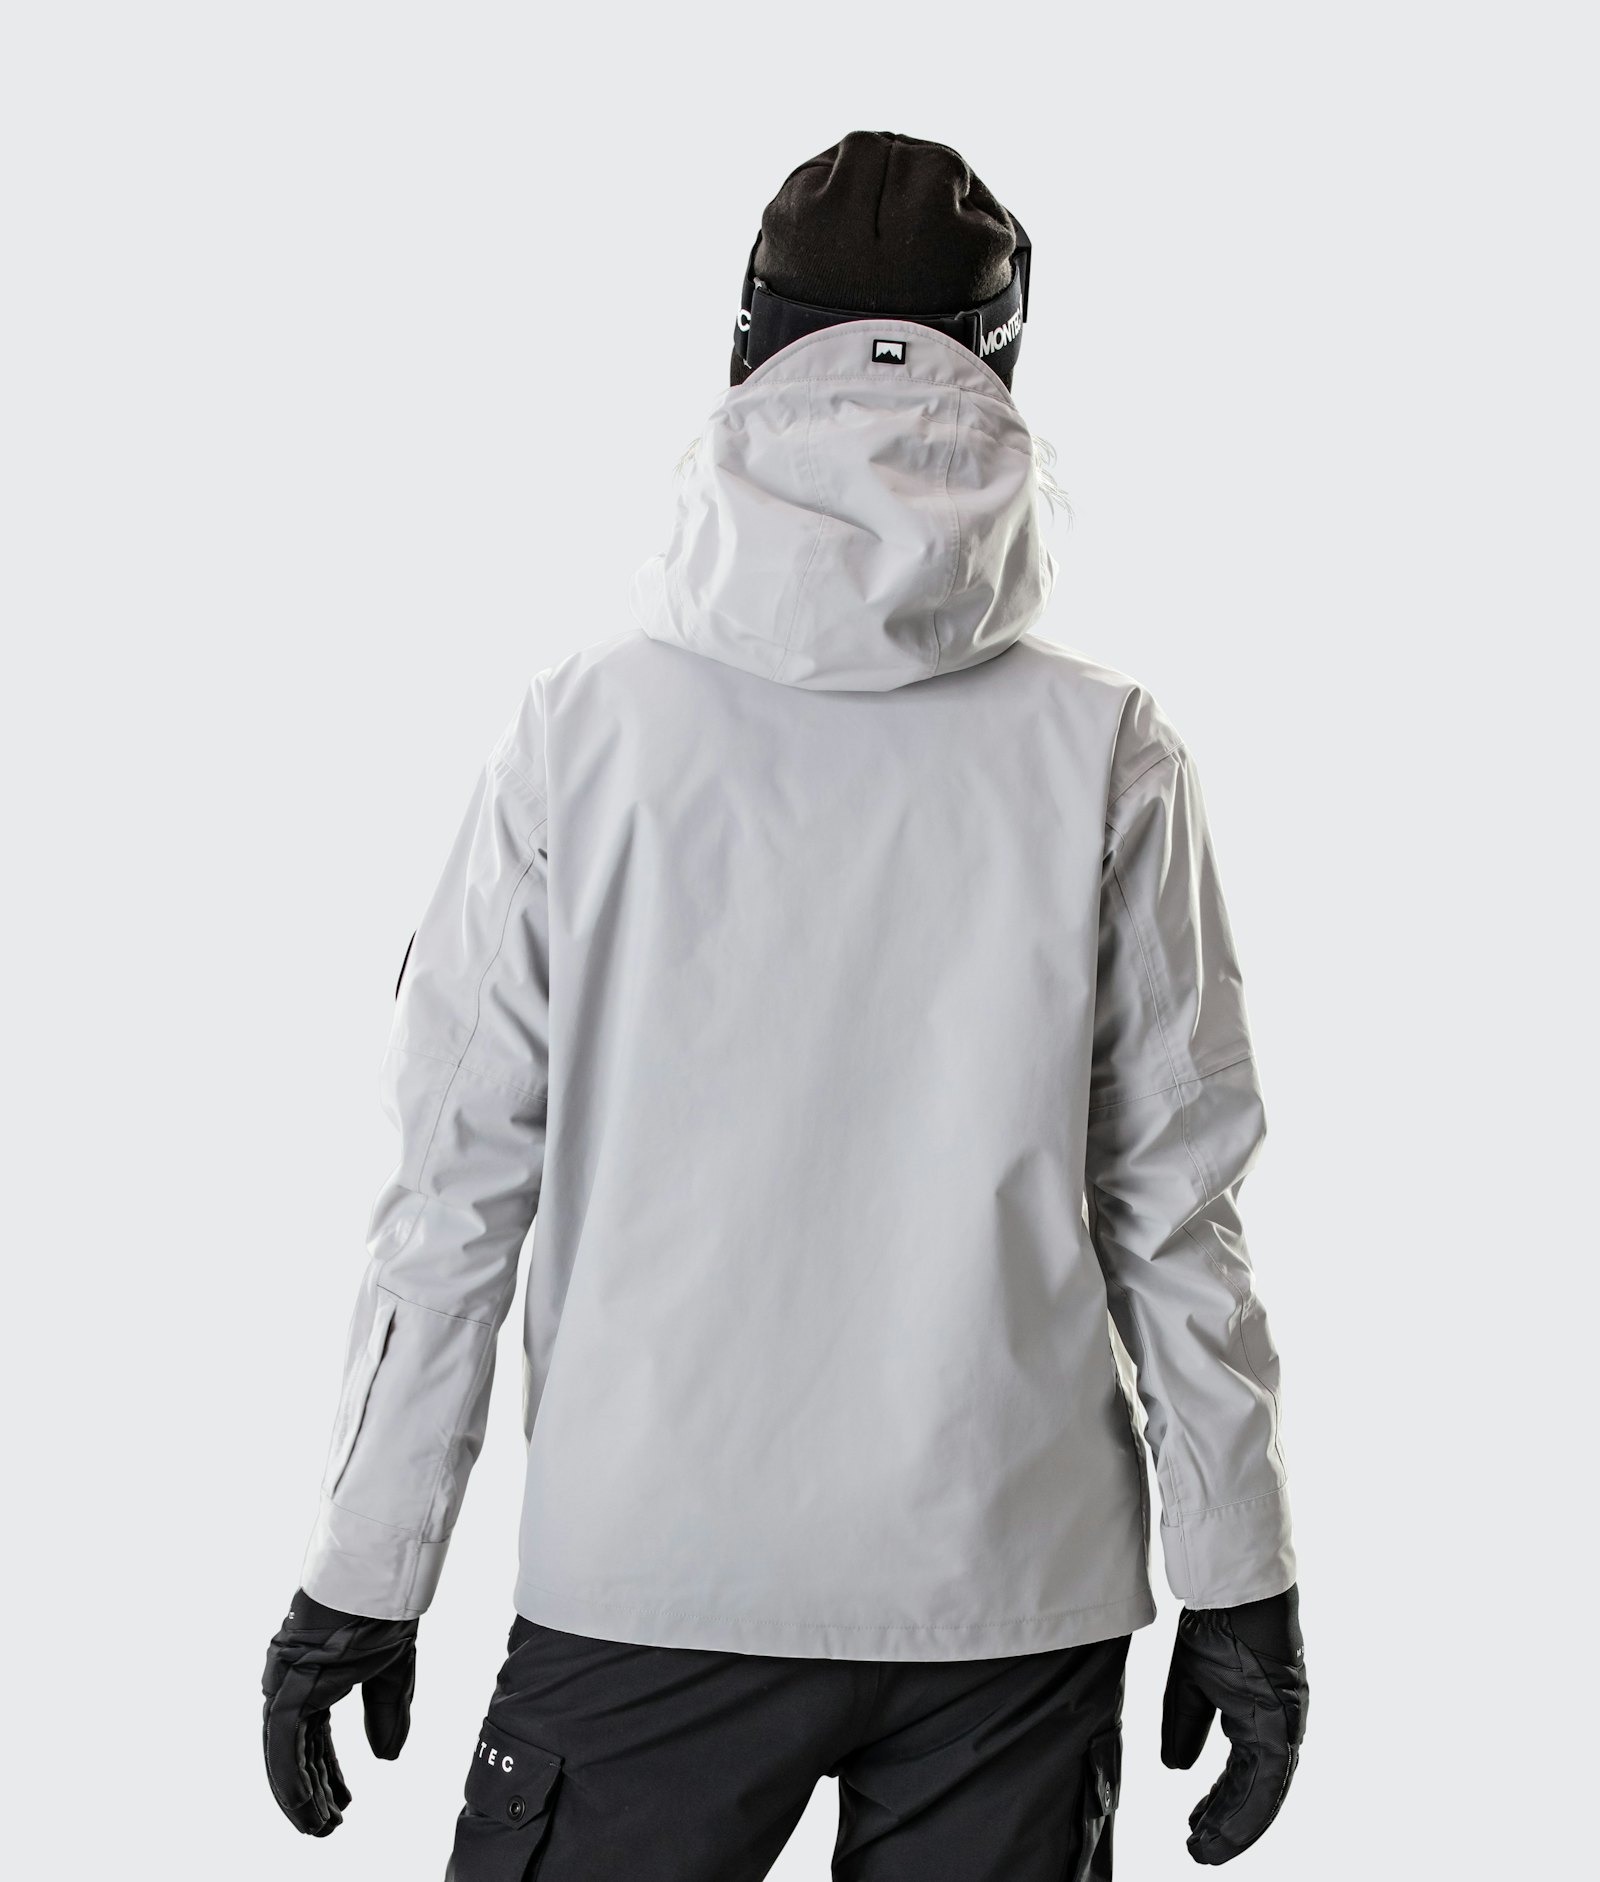 Typhoon W 2020 Snowboard Jacket Women Light Grey/Black